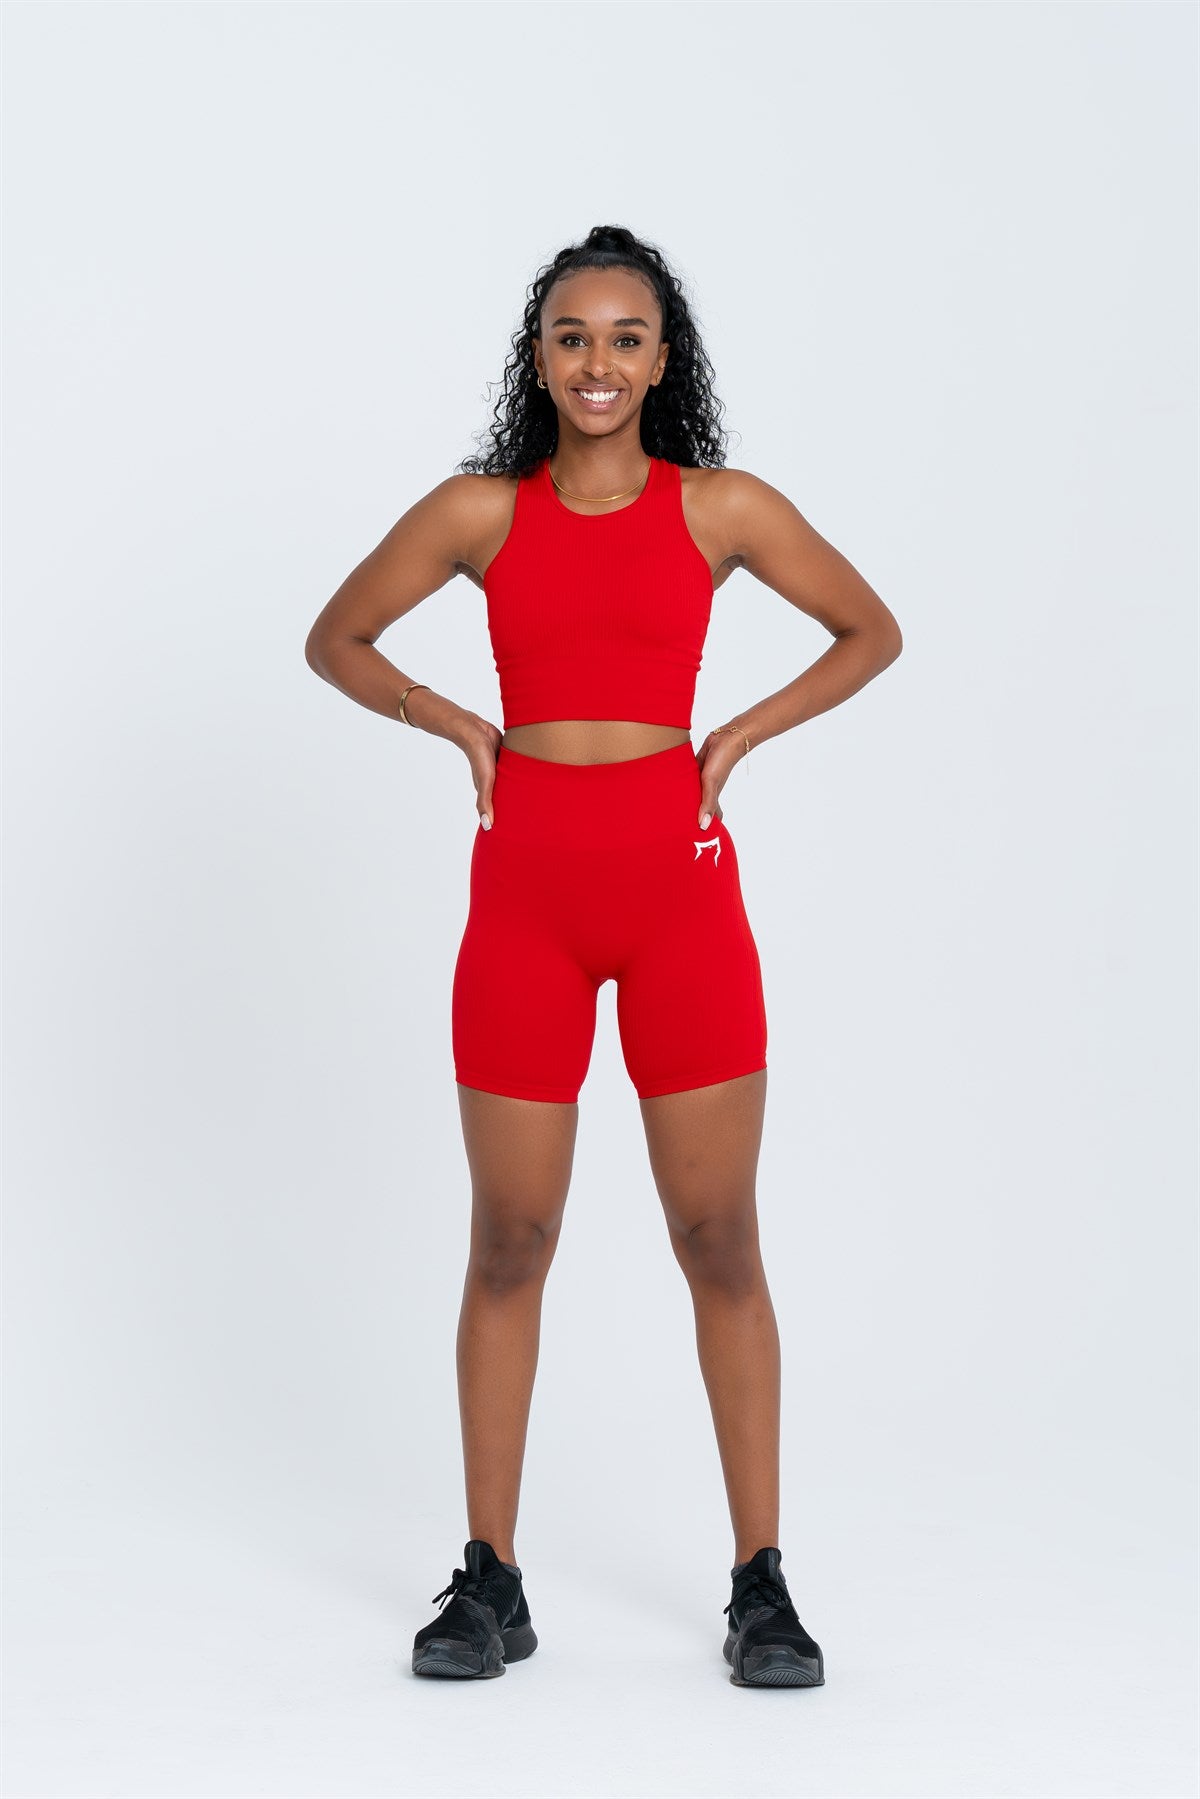 Gymwolves Women's Sports Shorts | Seamless Sports Shorts | Ribbed - Shakeproteine